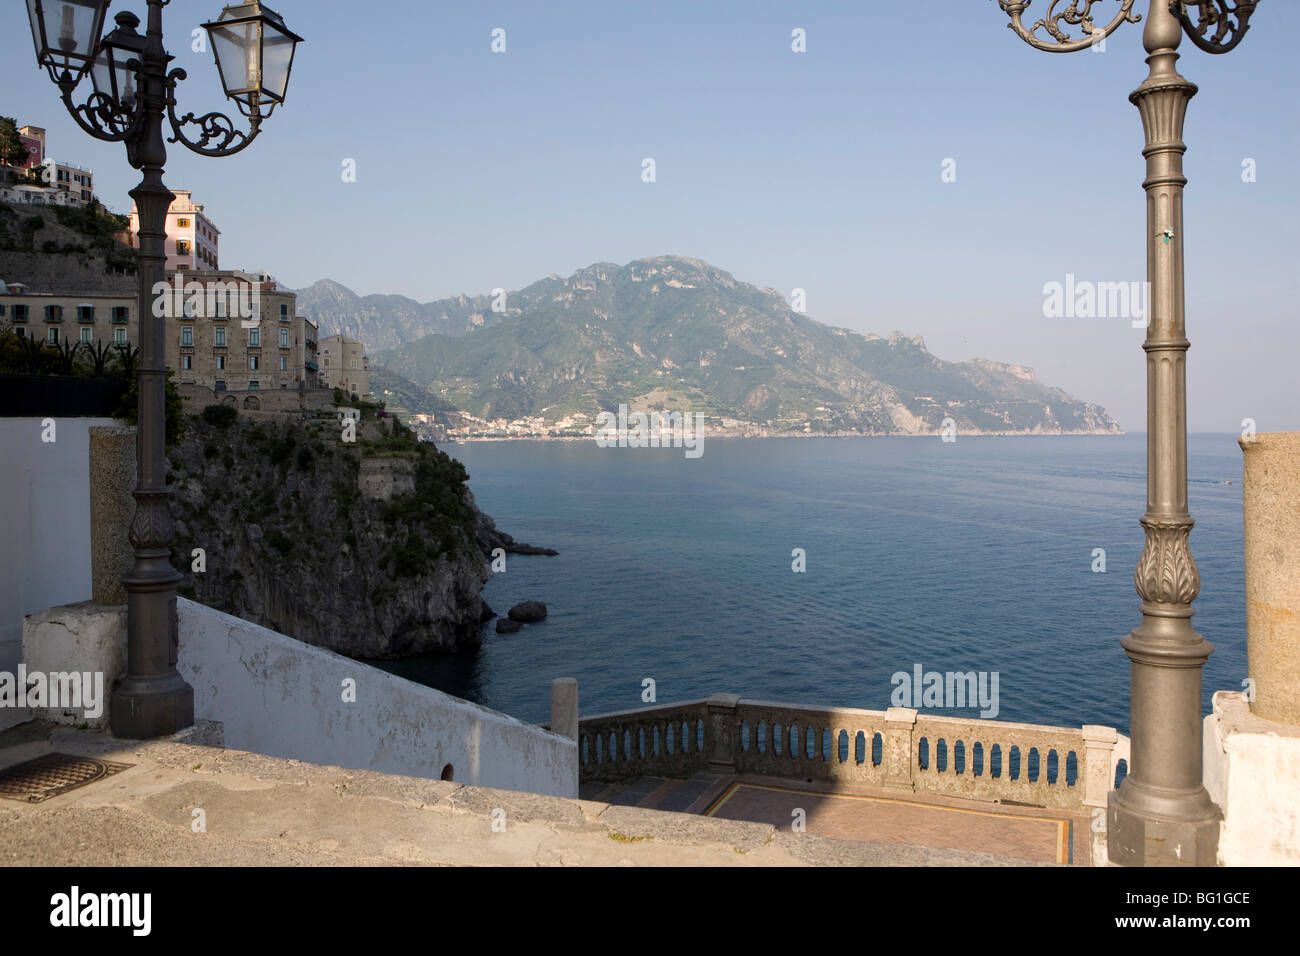 View of the coast from the village of Atrani, Costiera Amalfitana, UNESCO World Heritage Site, Campania, Italy, Europe Stock Photo